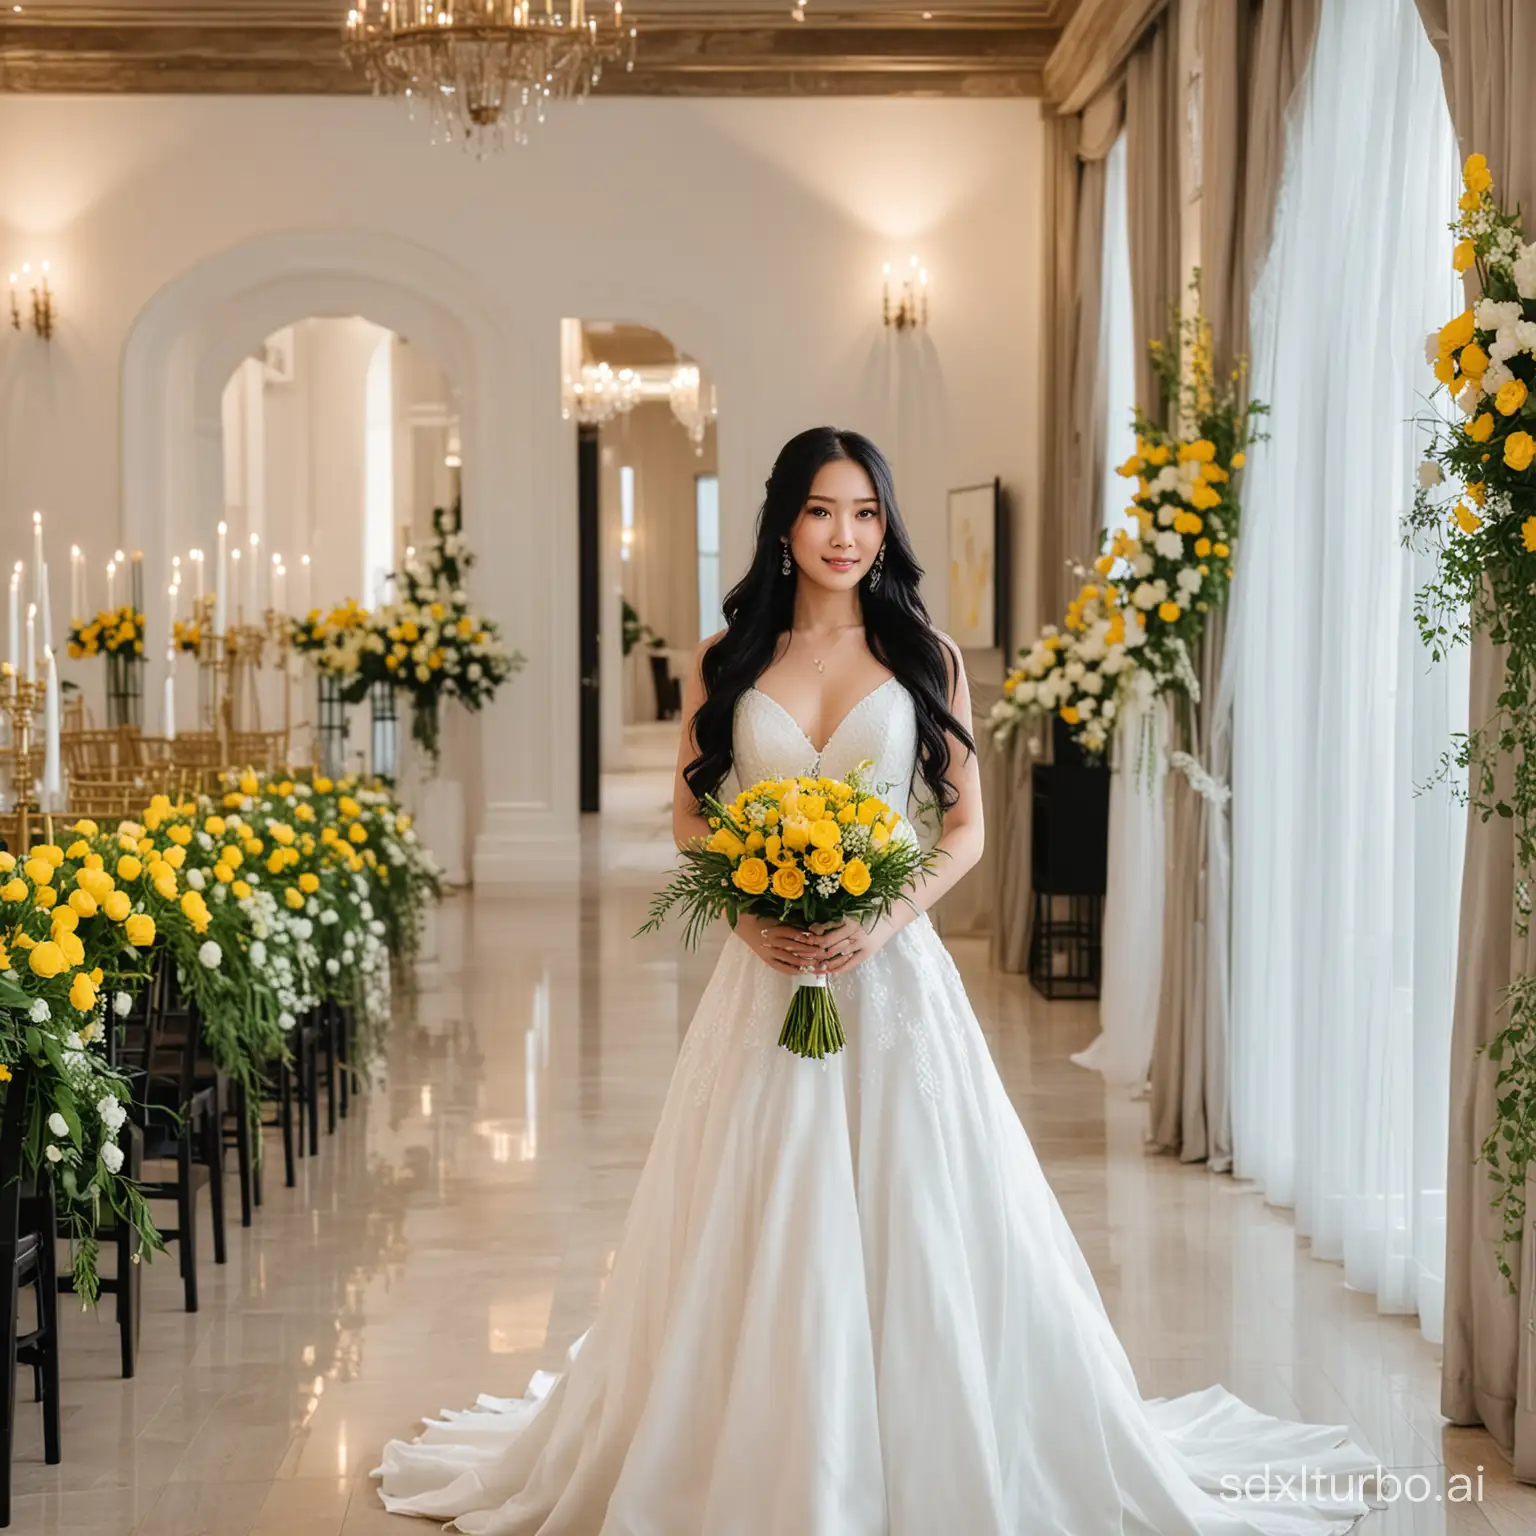 Elegant-Asian-Bride-Entering-Wedding-Hall-with-Bouquet